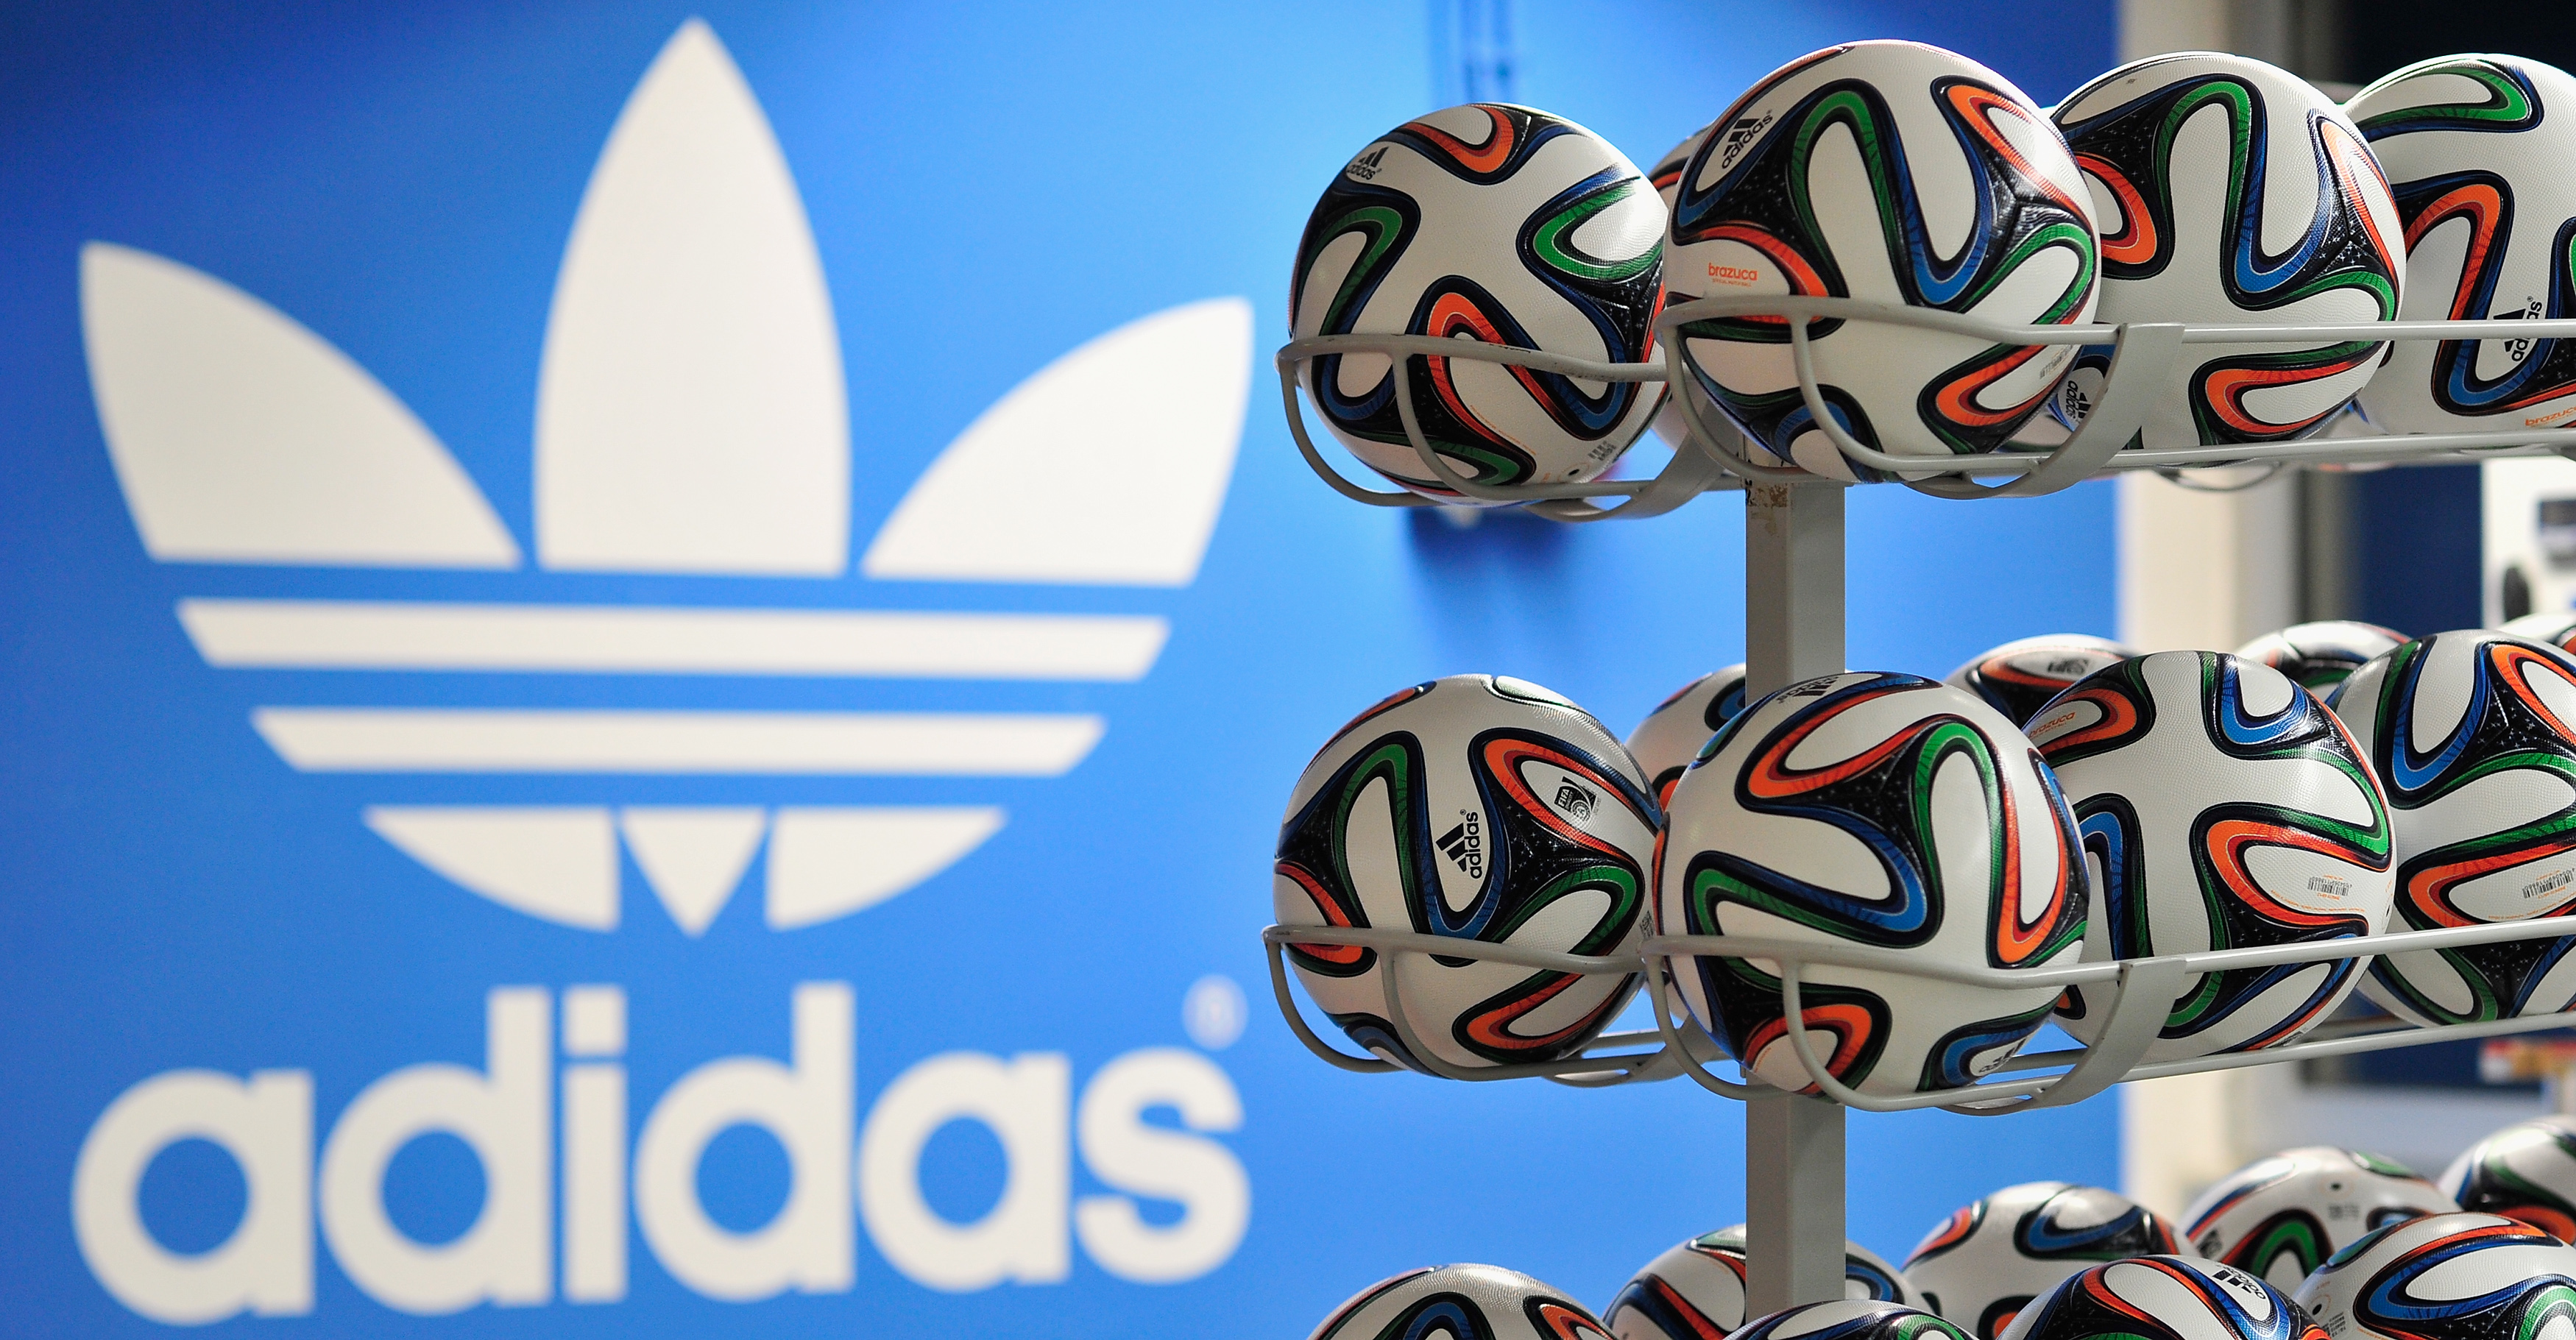 adidas Starts Production of Brazuca Match Balls